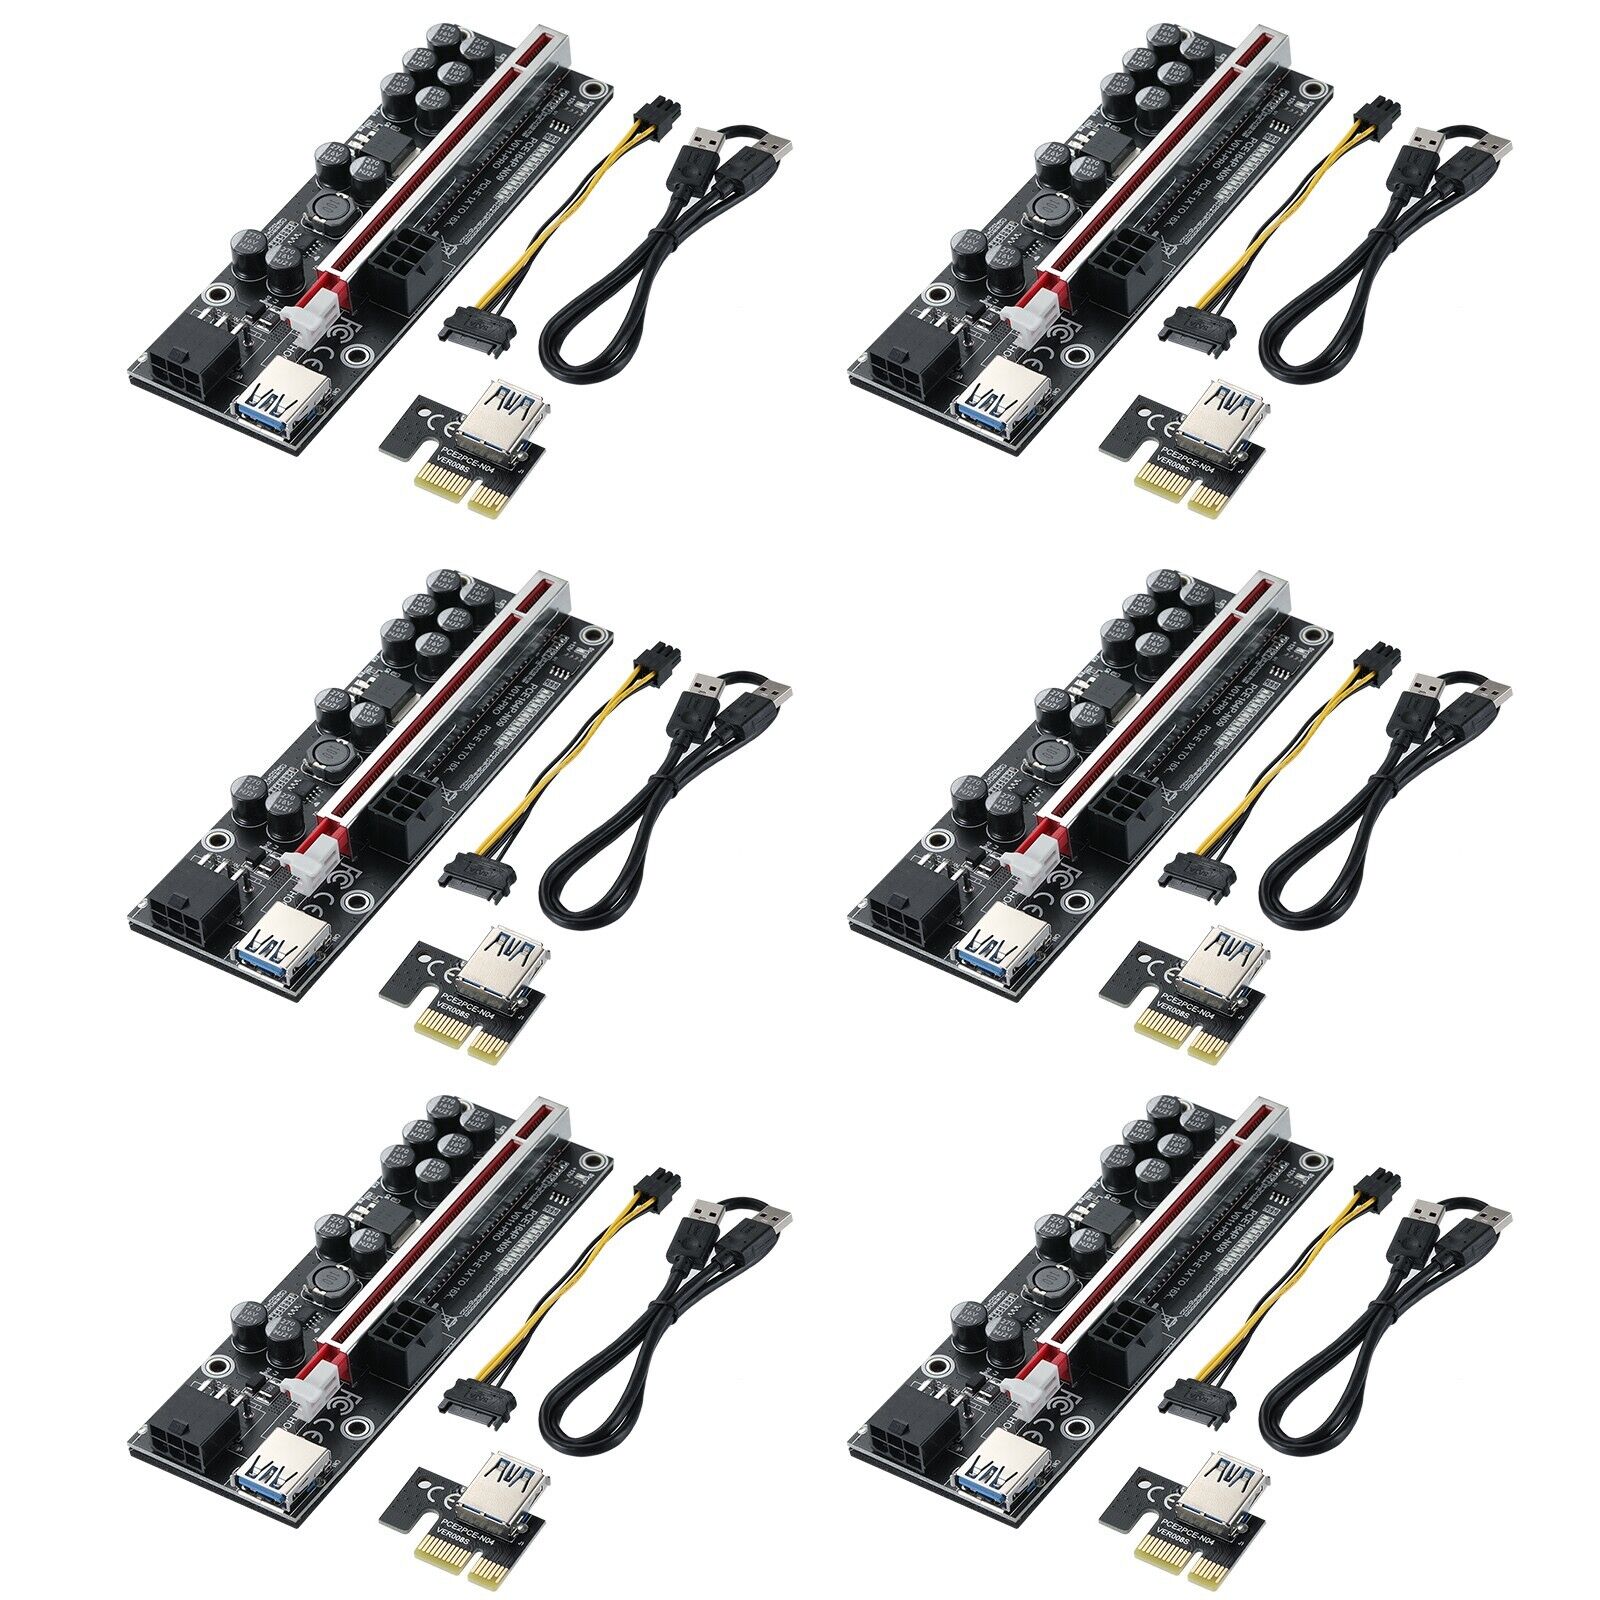 MZHOU 6PACK PCI-E 1X to 16X Riser Card with 7 PCI-E 1X Plug-in Card Adapter Card